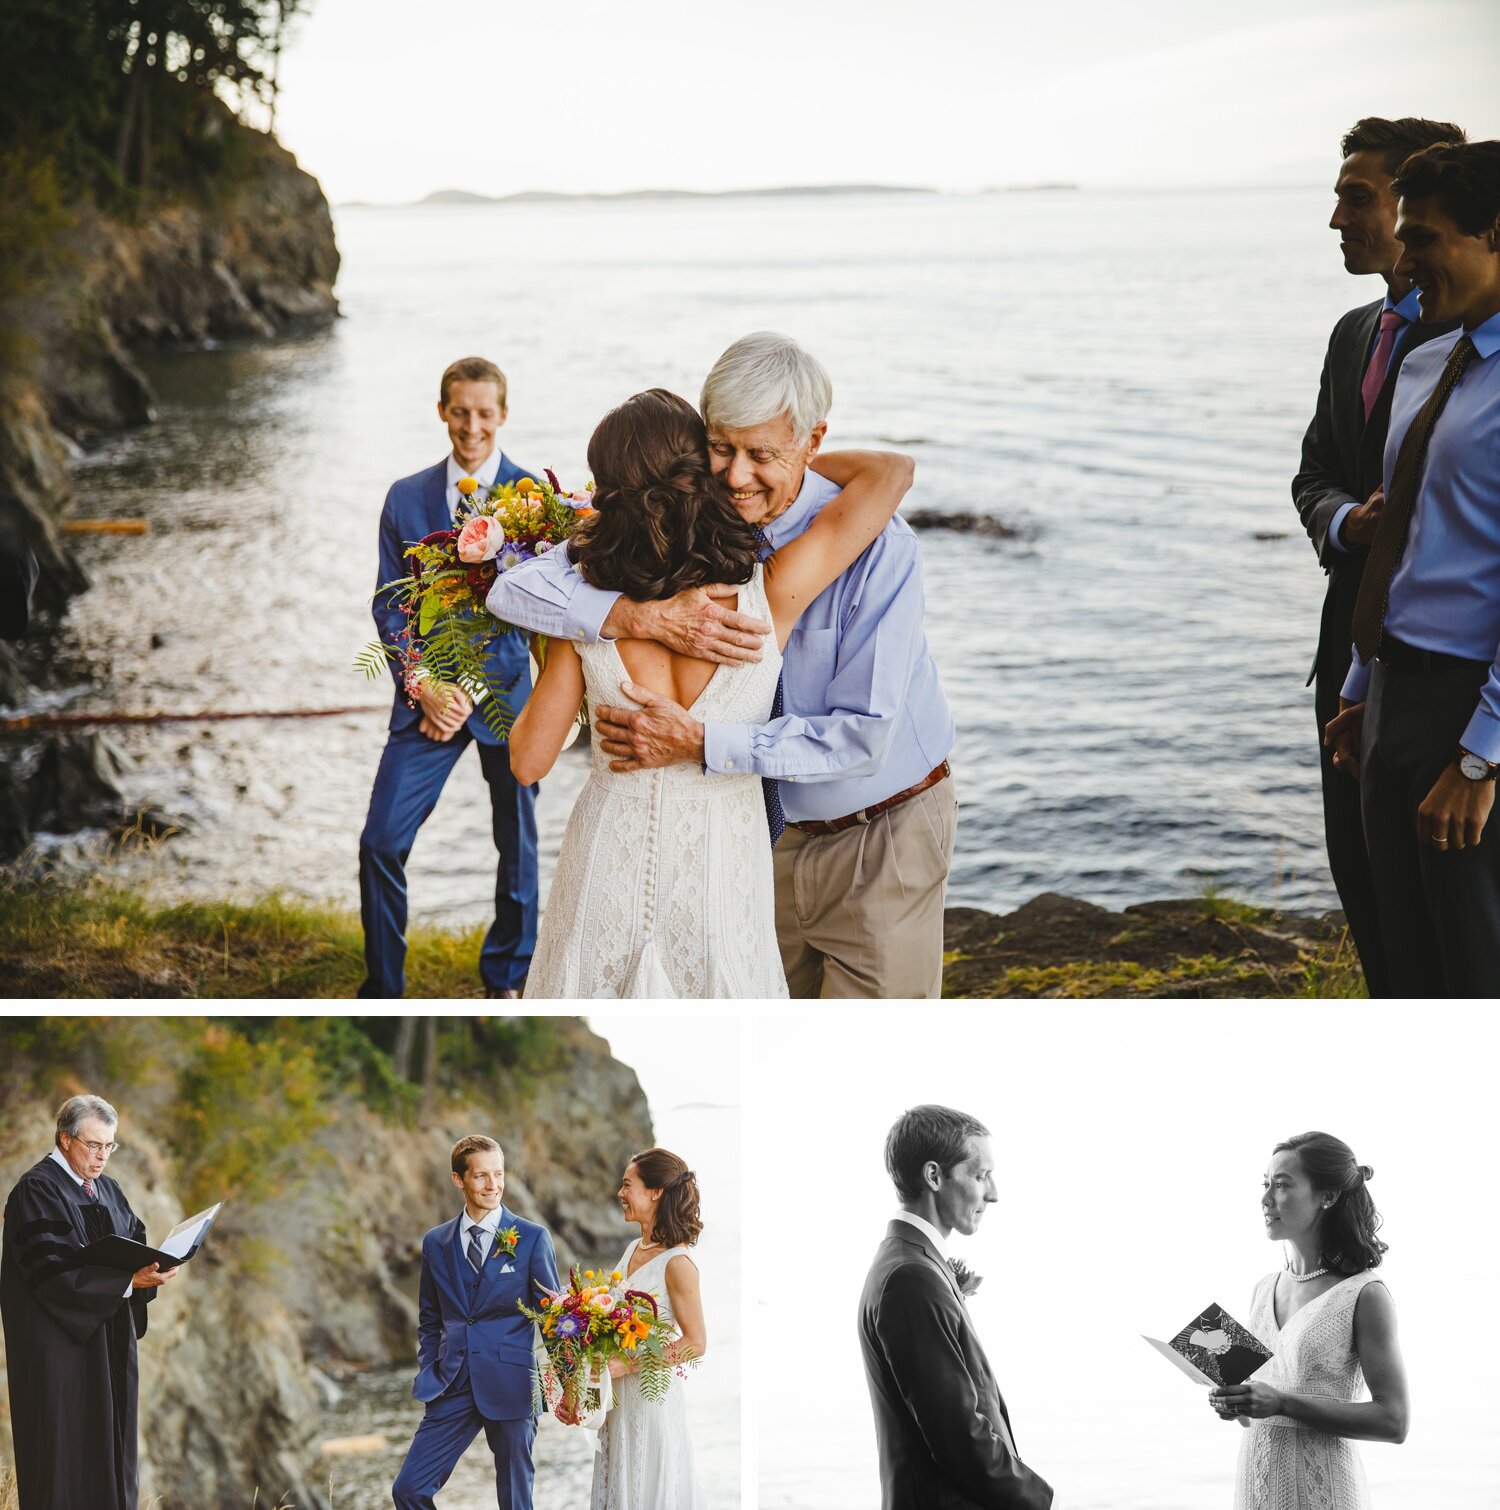 San-Juan-Islands-Wedding-micro-wedding-Mt-Constitution-Moran-State-Park-Orcas-Island-Satya-curcio-photography (3).jpg